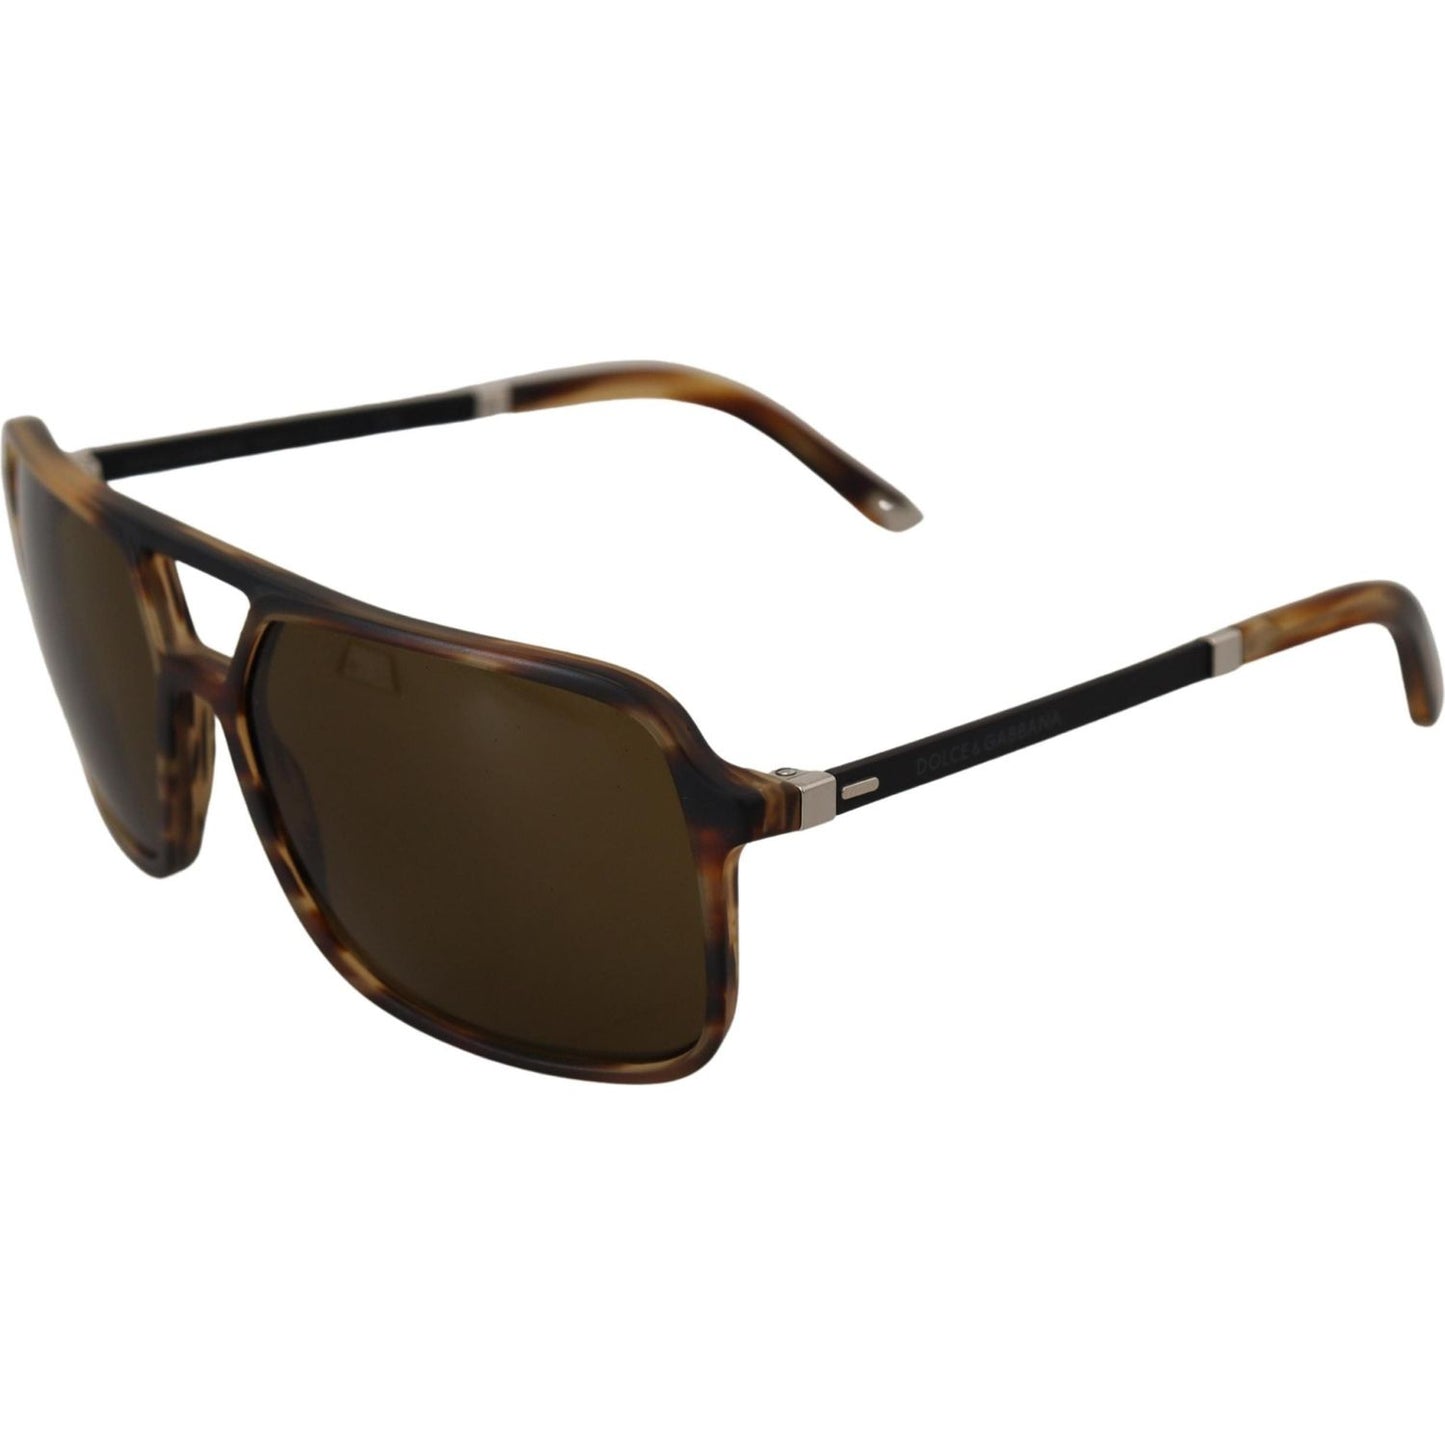 Dolce & Gabbana Chic Basalto Collection Brown Sunglasses chic-basalto-collection-brown-sunglasses